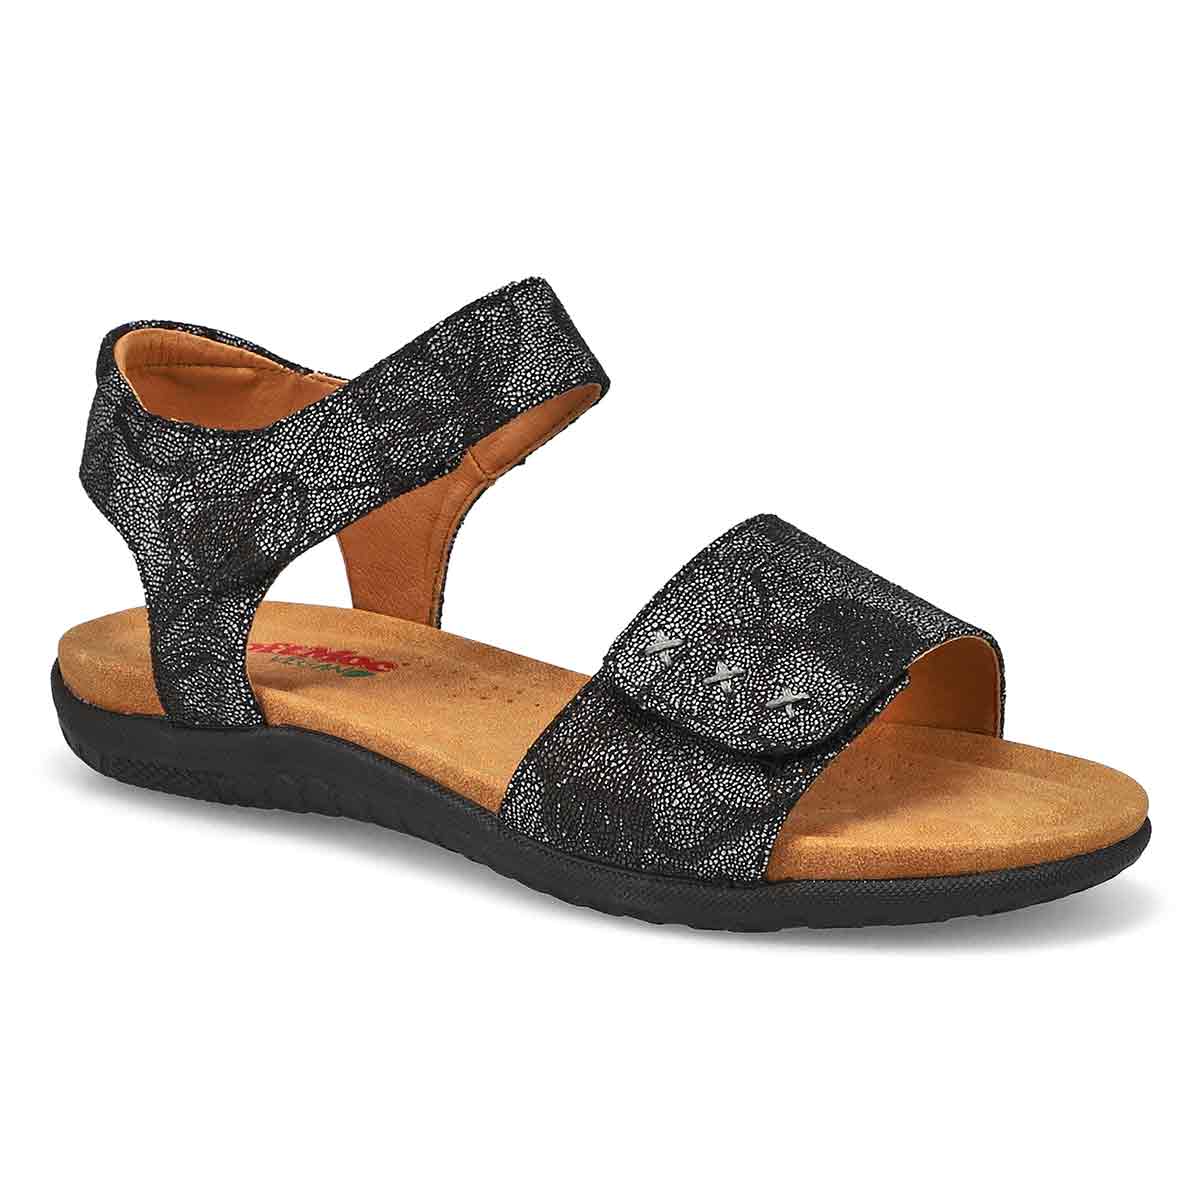 Sandale végane ELENA 01, noir/floral, femmes